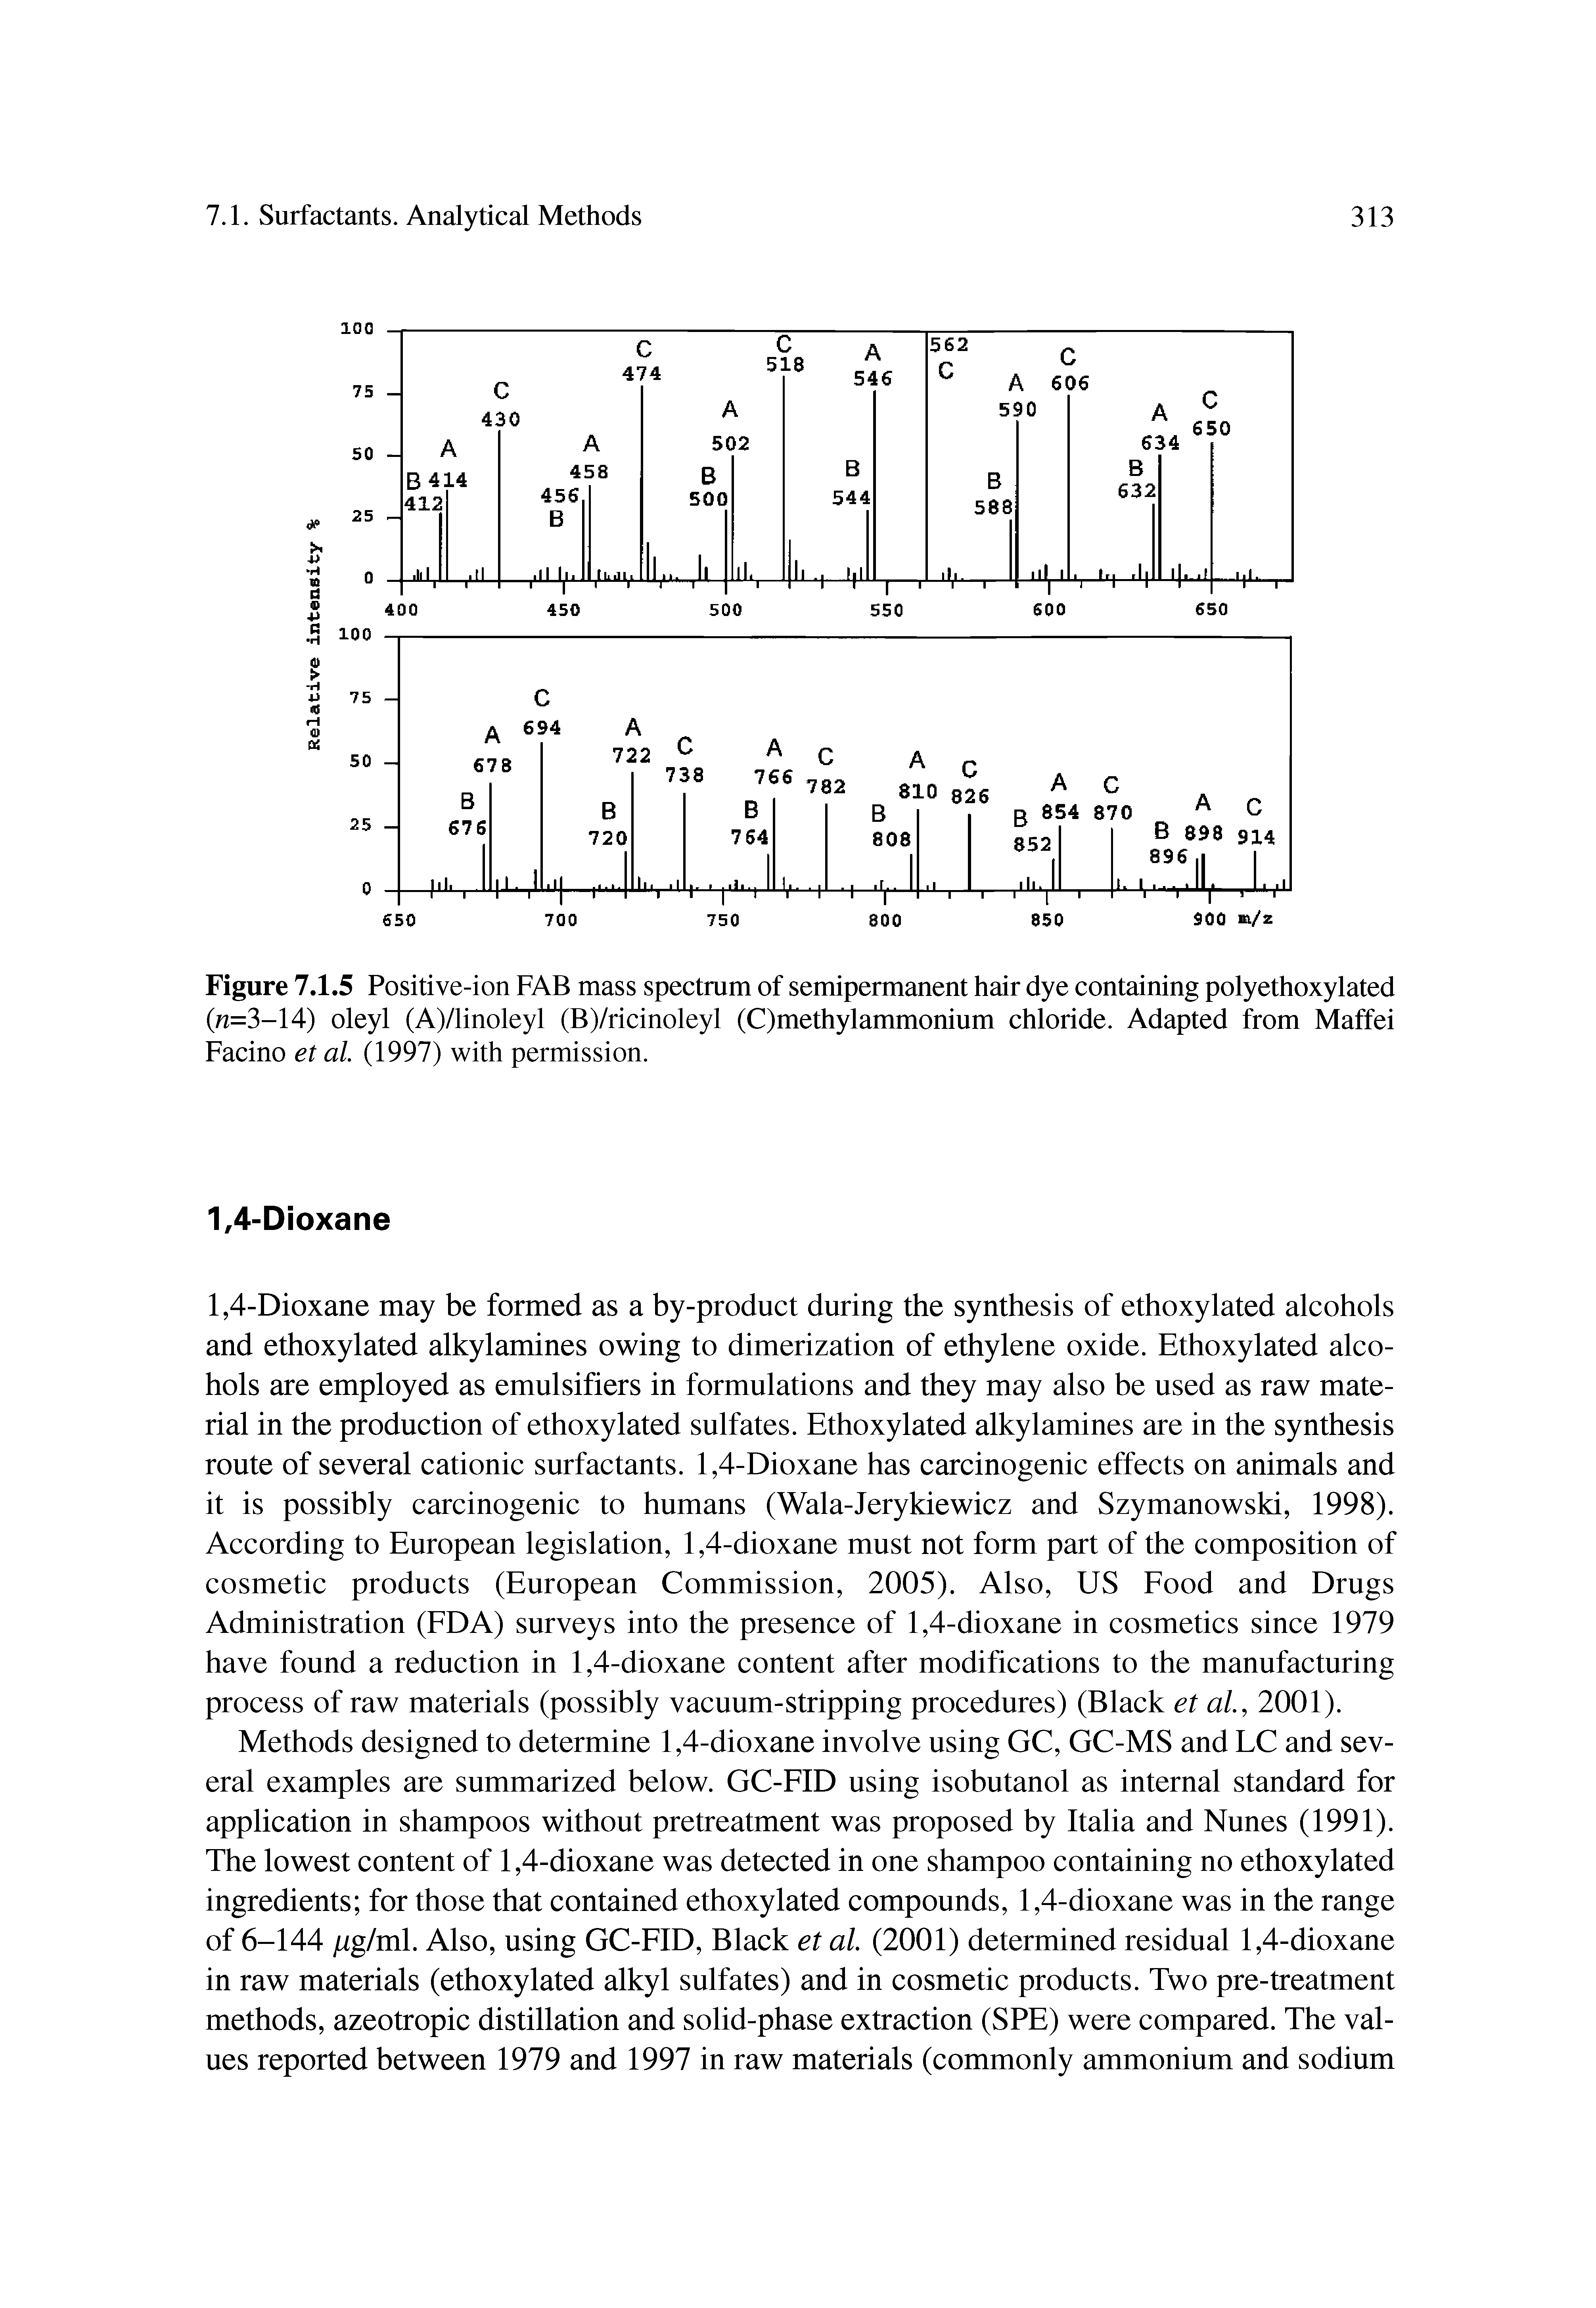 Figure 7.1.5 Positive-ion FAB mass spectrum of semipermanent hair dye containing polyethoxylated (n=3-14) oleyl (A)/linoleyl (B)/ricinoleyl (C)methylammonium chloride. Adapted from Maffei Facino et al (1997) with permission.